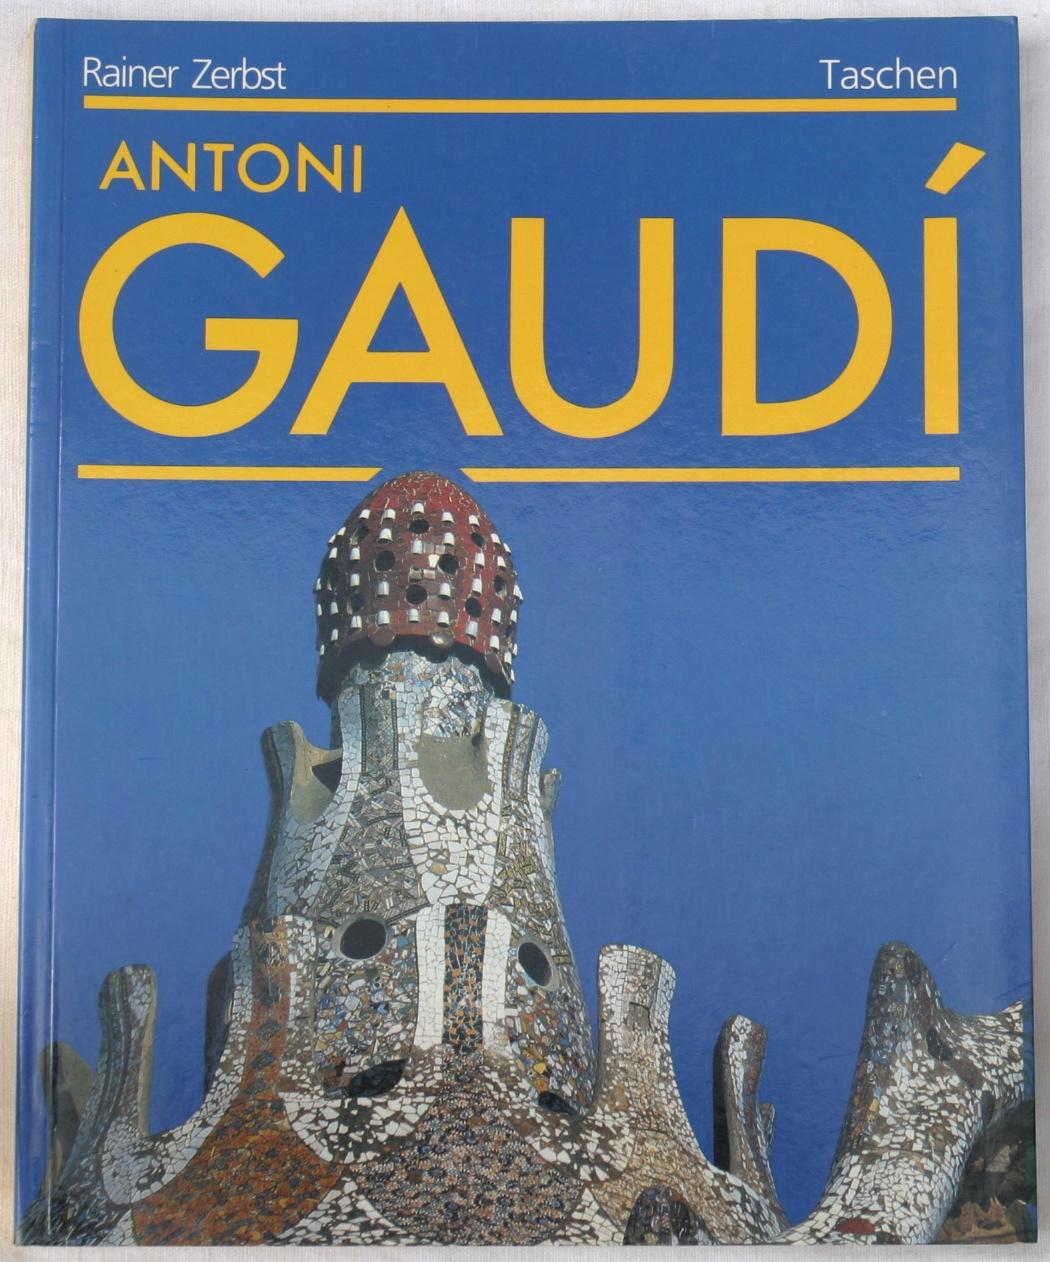 Gaudi 18521926 Antoni Gaudi i Cornet  A Life Devoted to Architecture